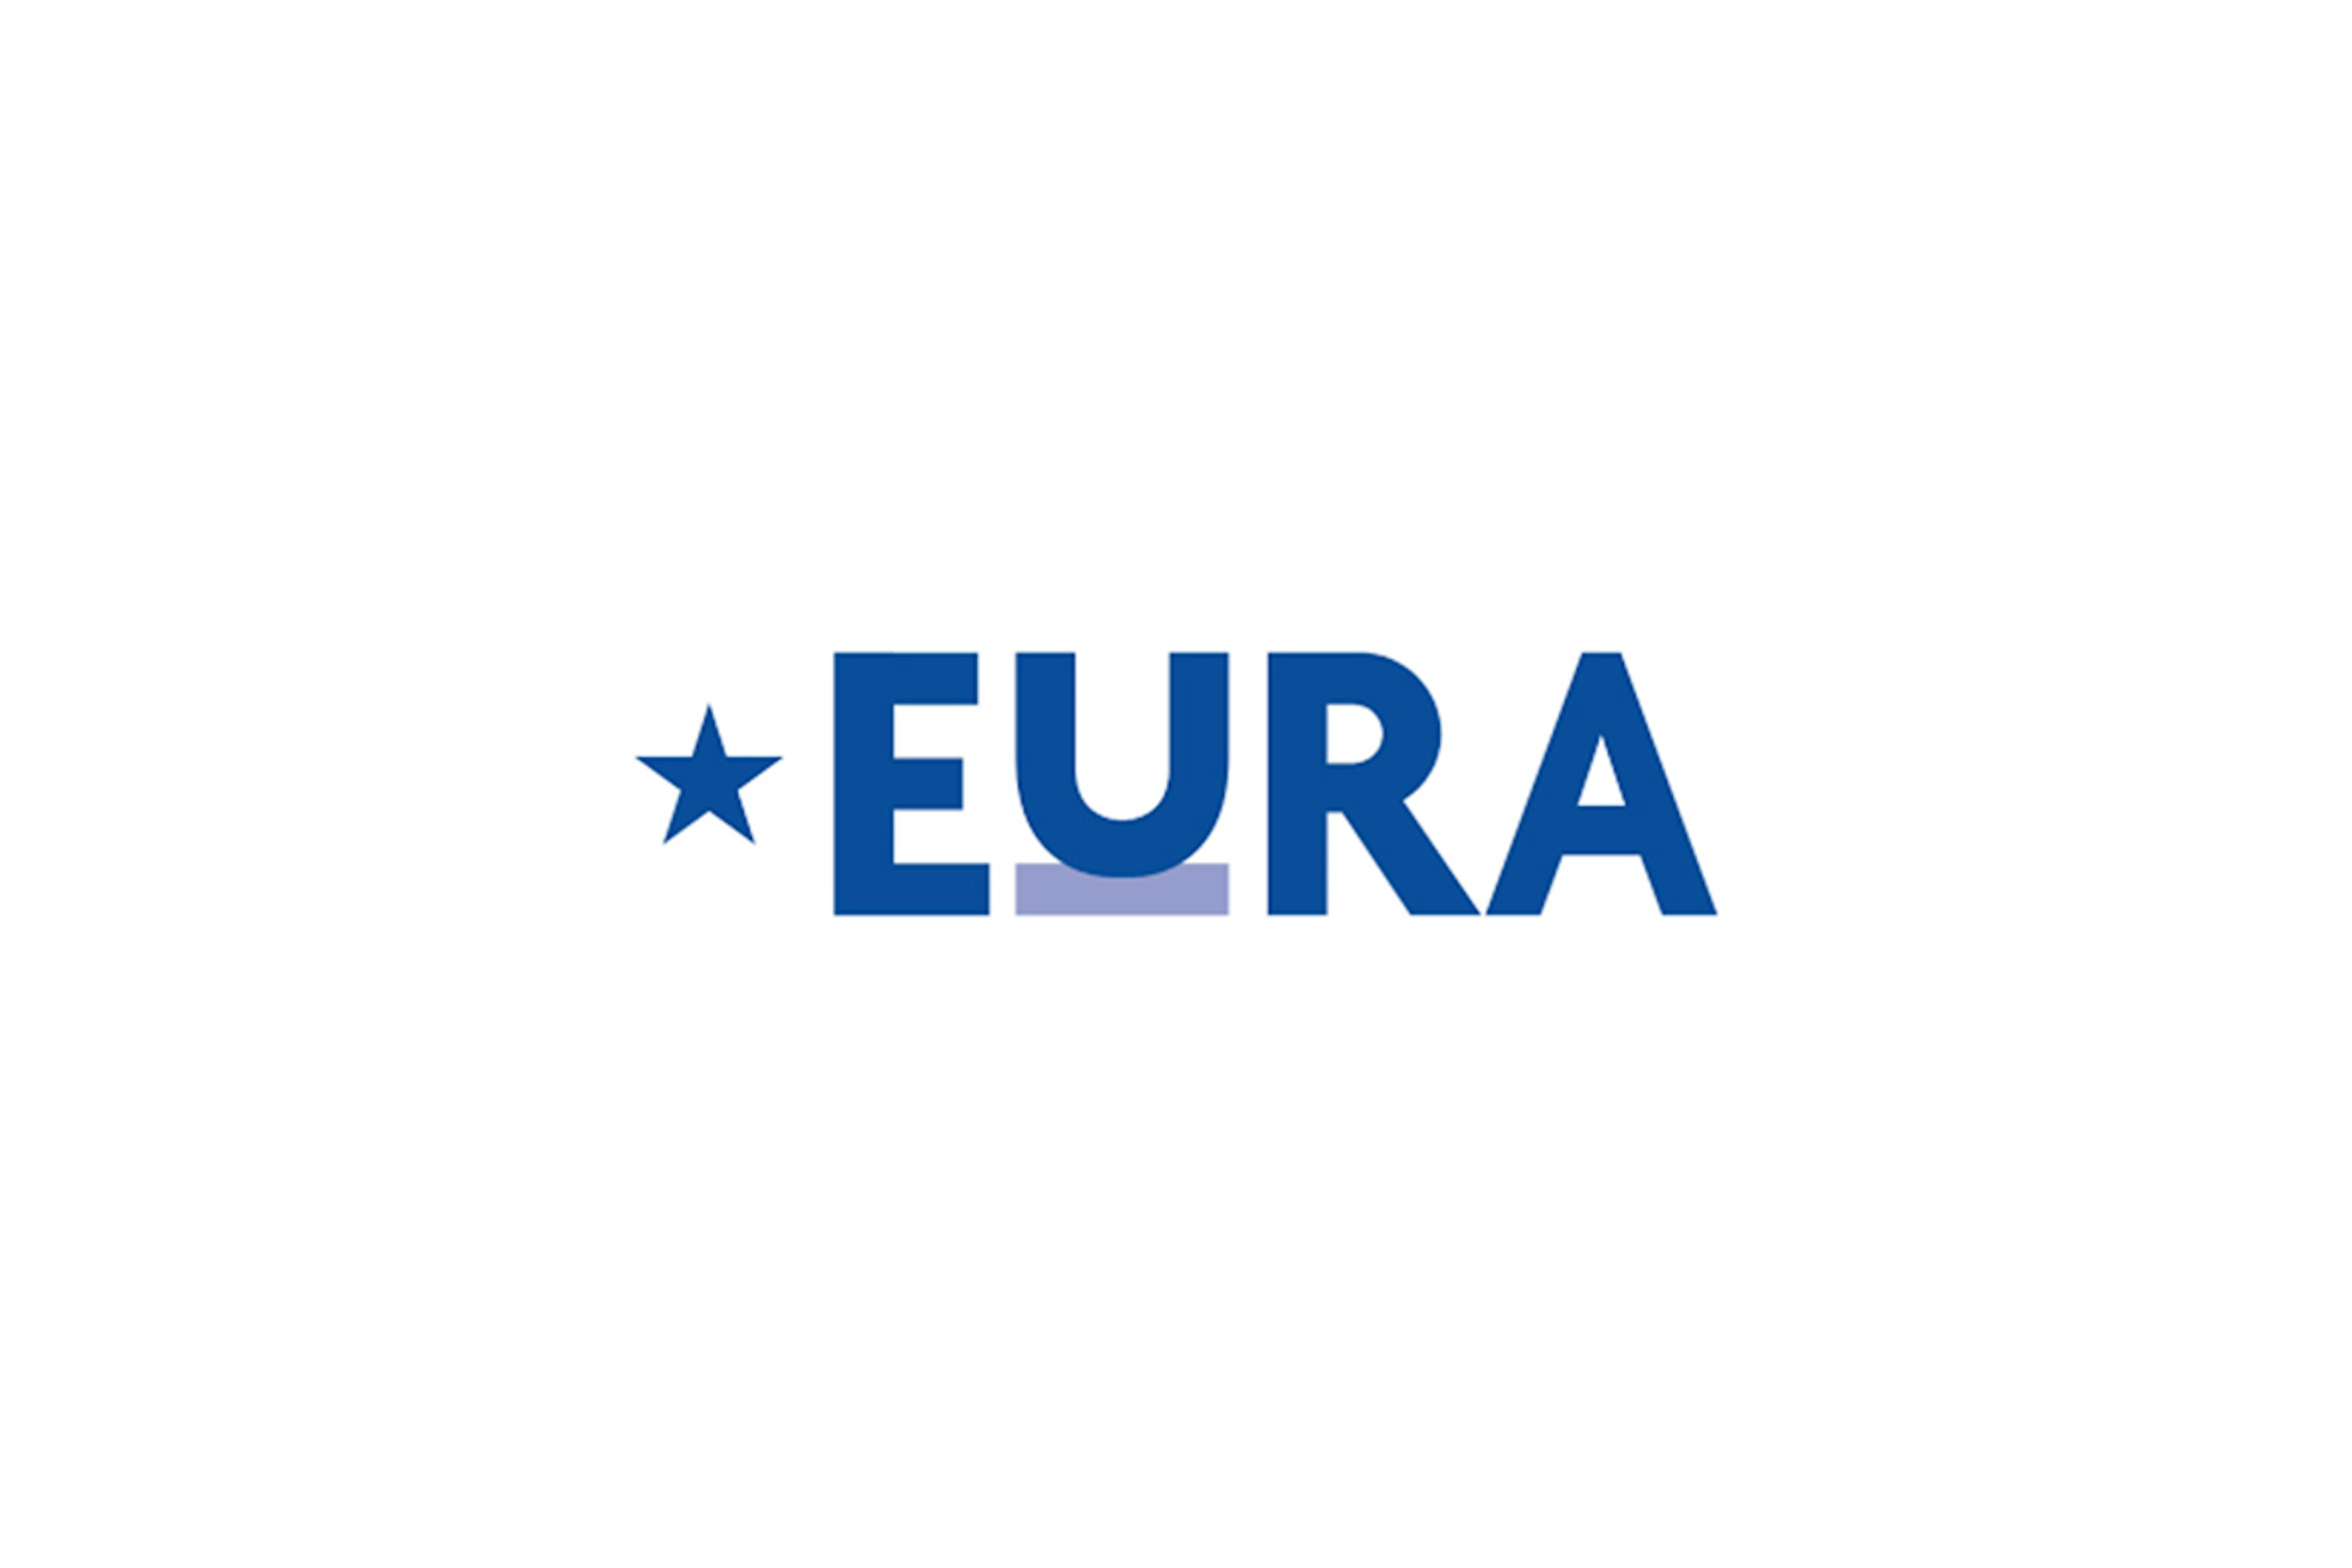 Eura (1)